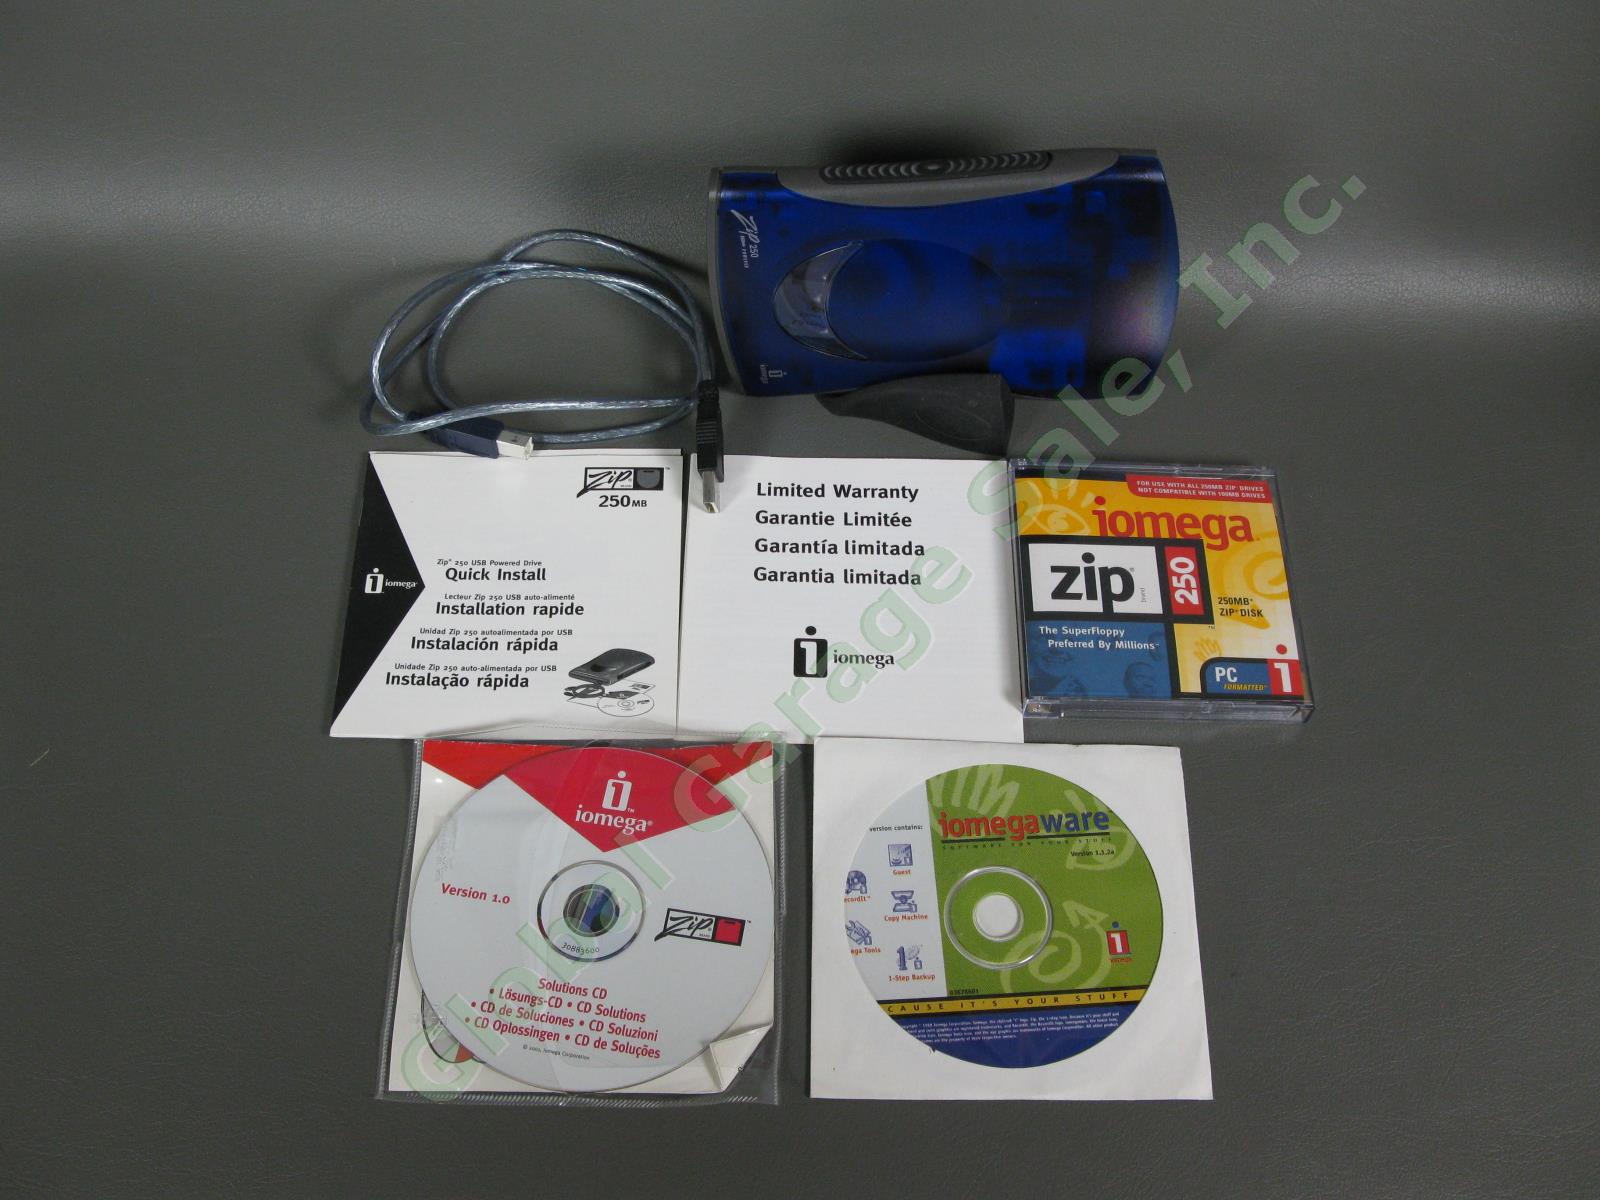 Iomega Zip 250 MB External Drive USB Powered Software Guide Disk Z250USBPCMBP NR